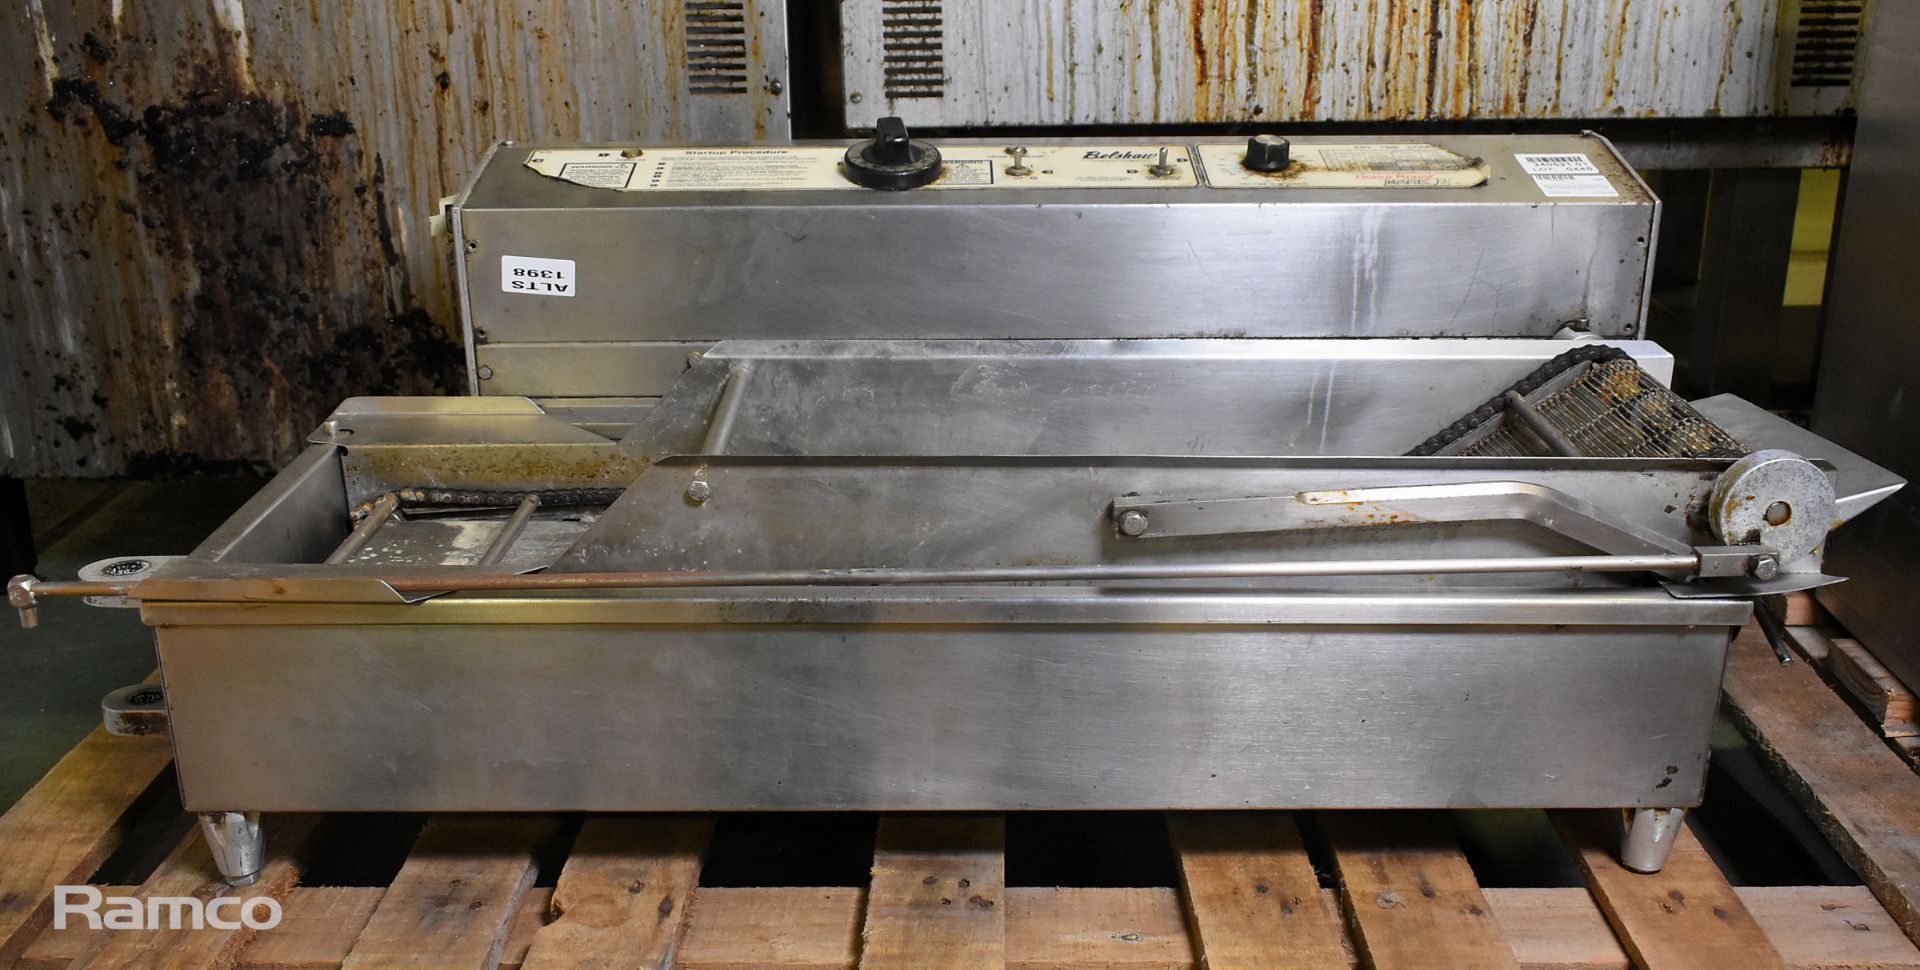 Belshaw Donut Robot Mark II stainless steel conveyor fryer - Image 5 of 8